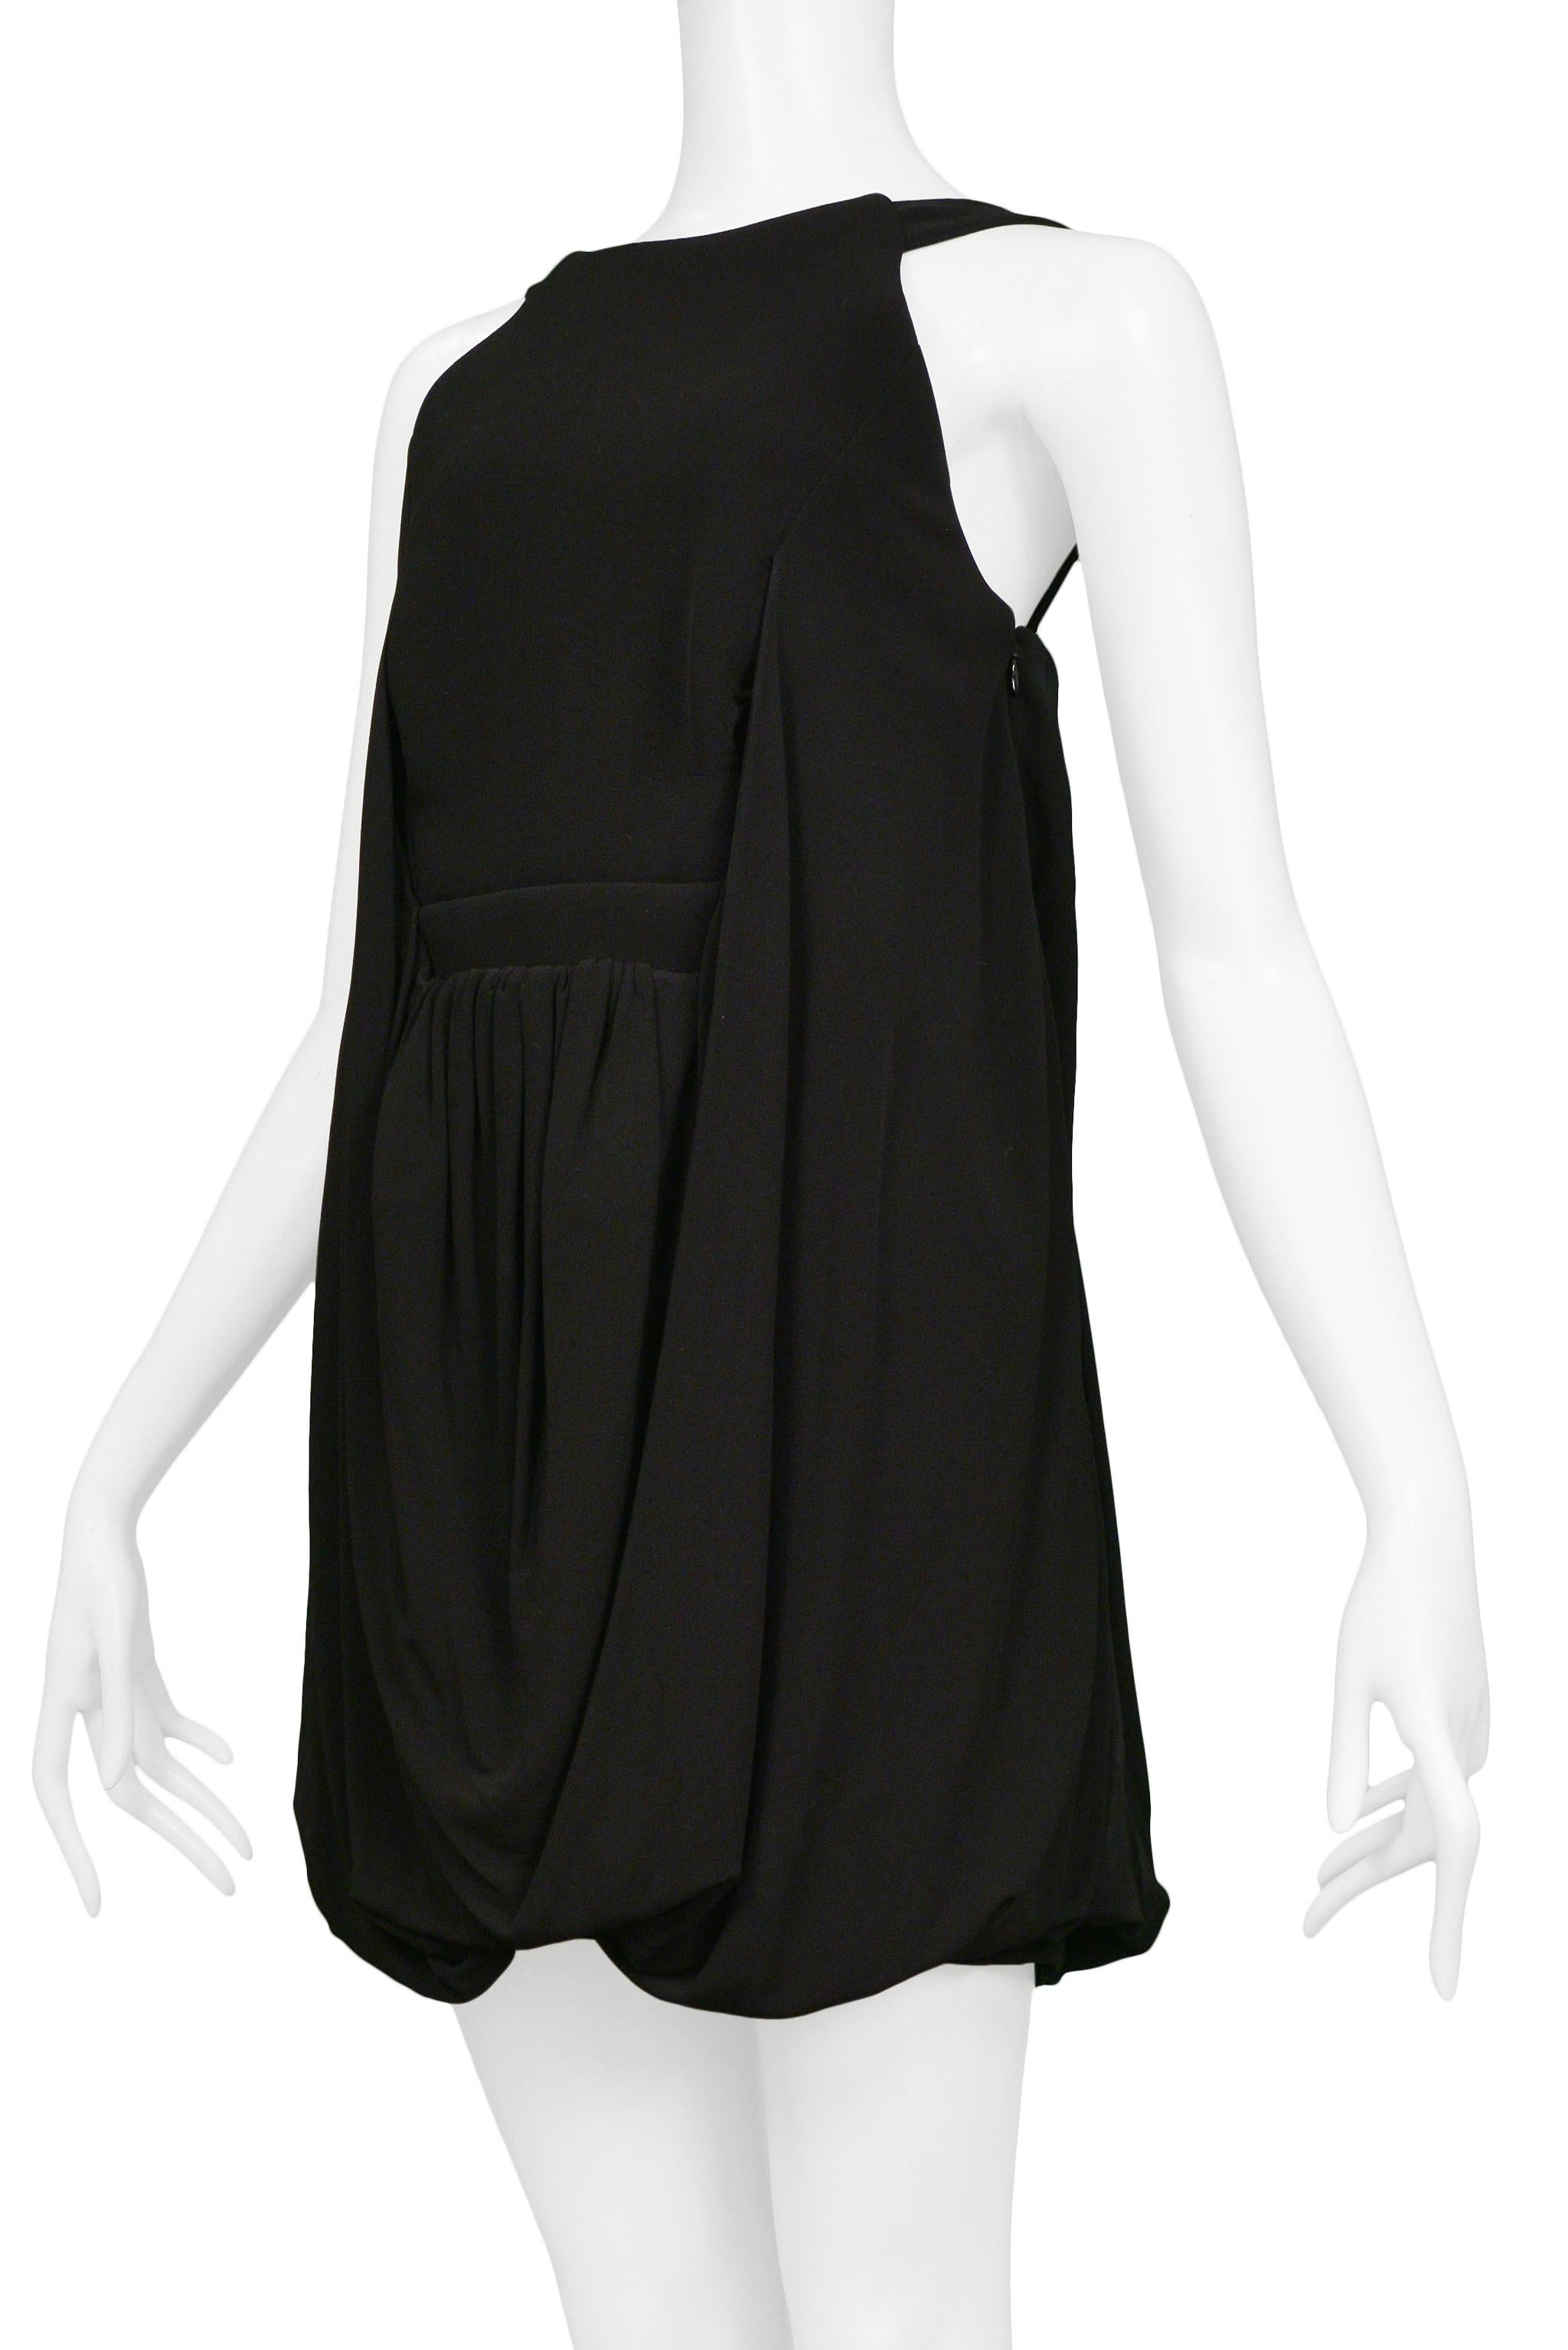 Women's Balenciaga by Ghesquiere Black Cocktail Mini Dress 2007 For Sale